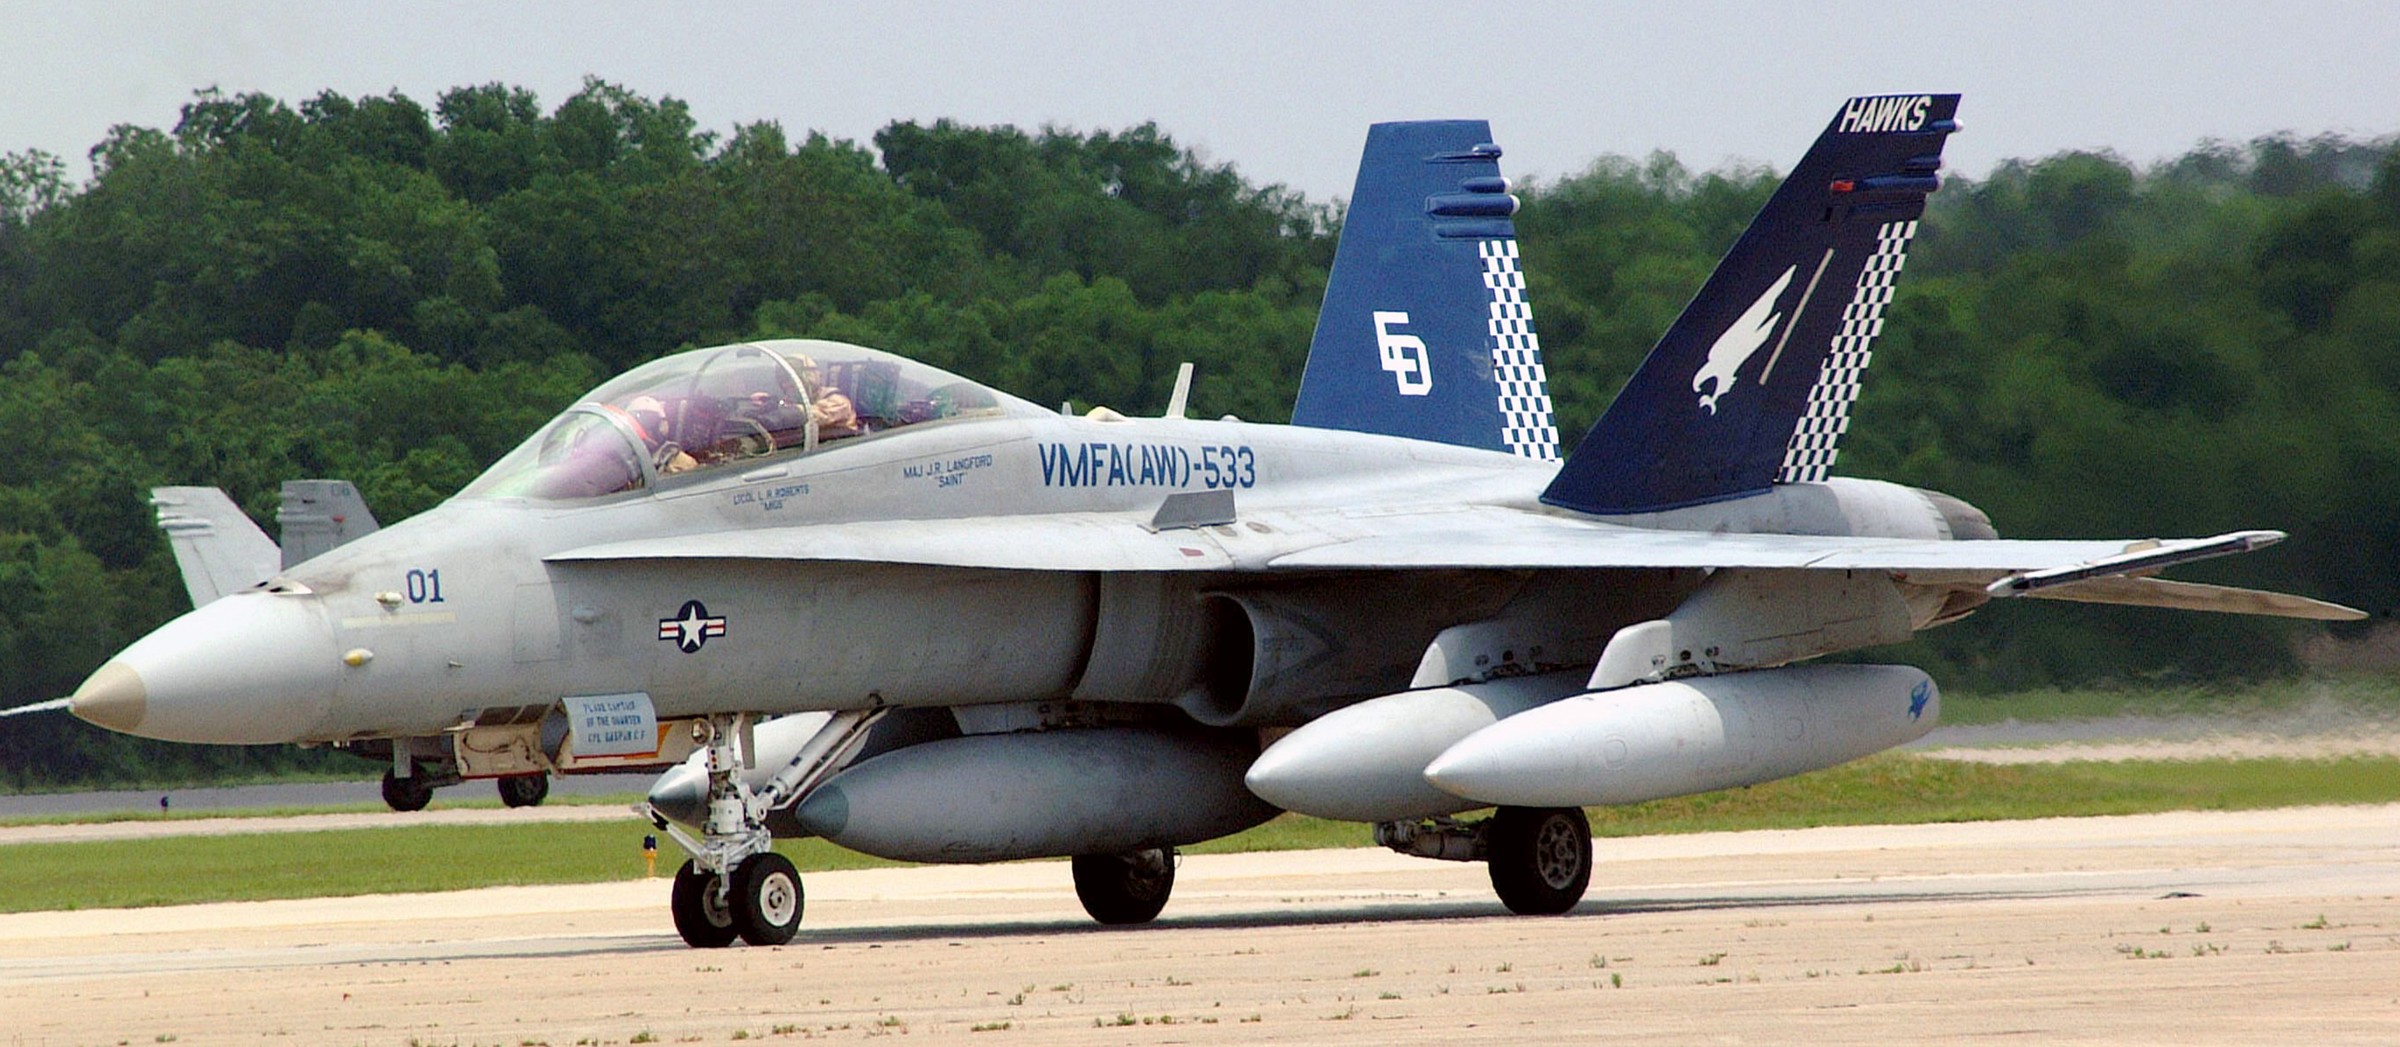 vmfa(aw)-533 hawks marine fighter attack squadron usmc f/a-18d hornet 04 mcas beaufort south carolina